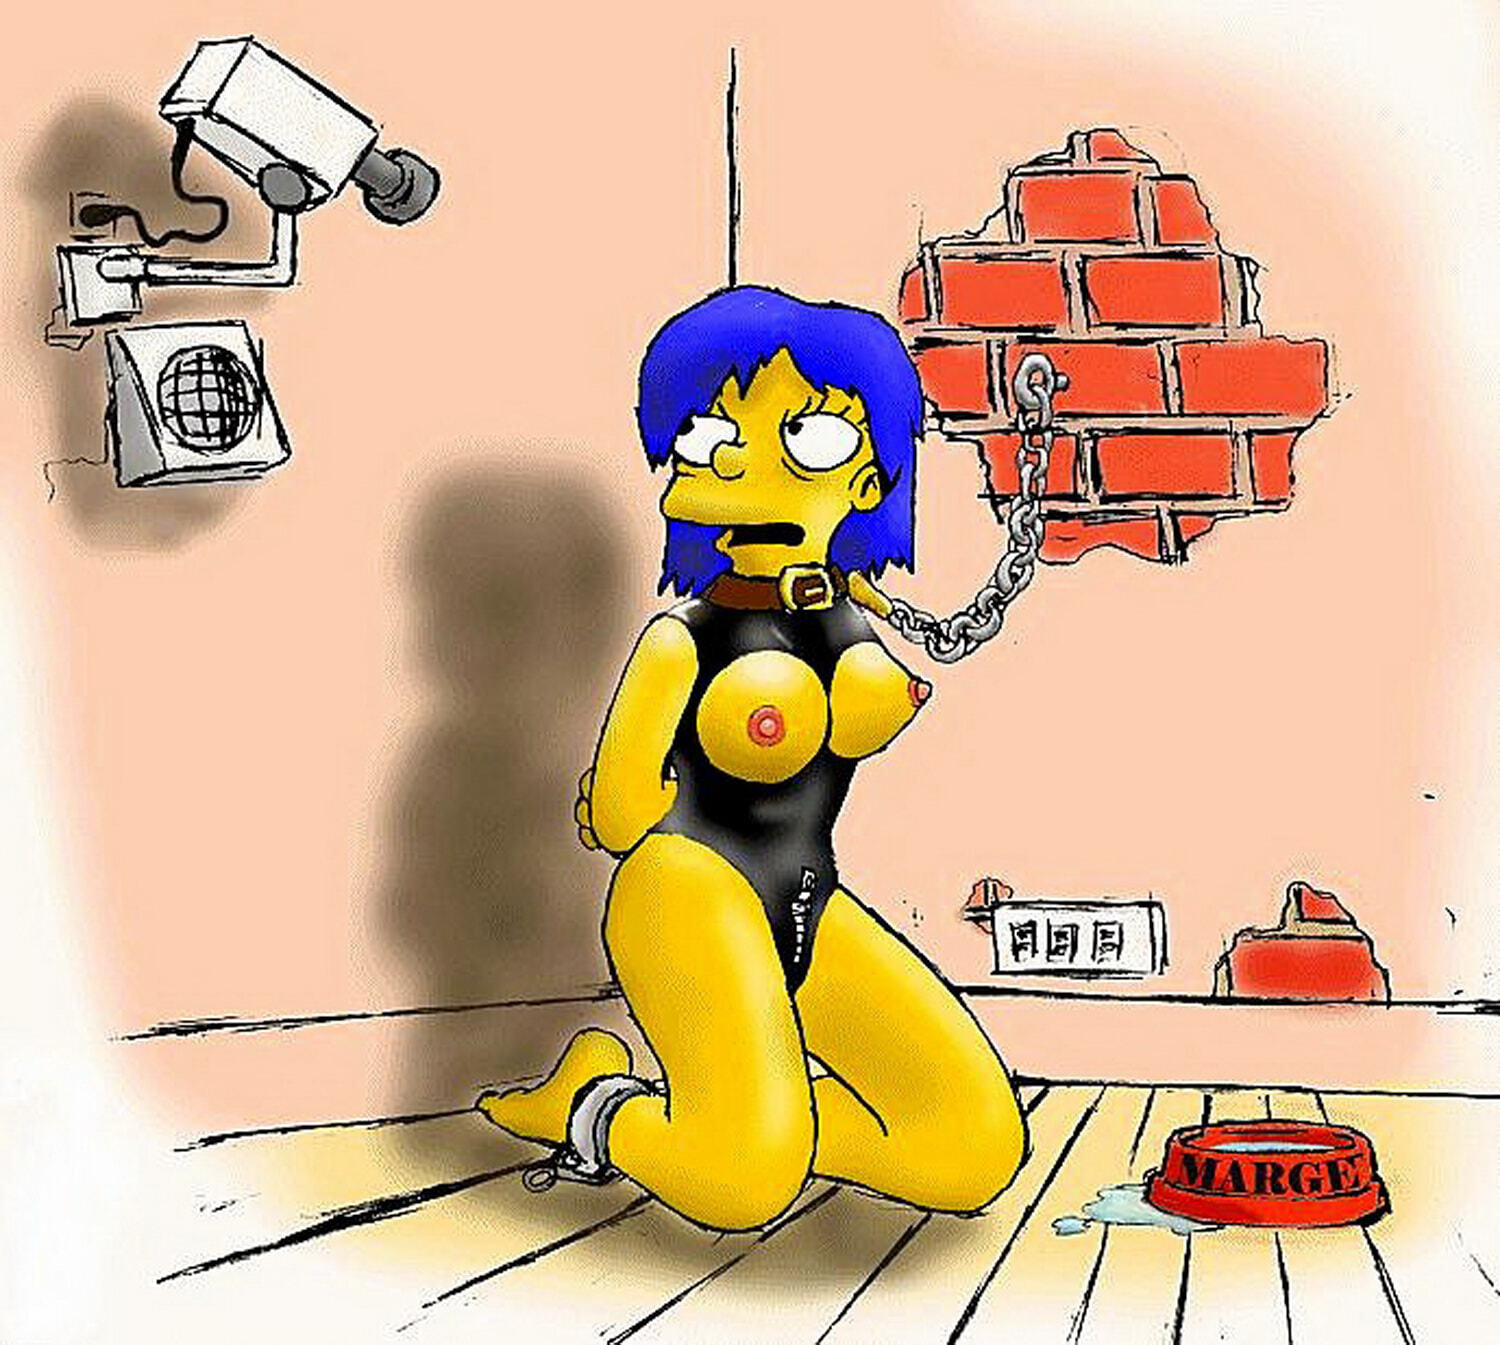 Marge Simpson and Maggie Simpson Bondage Your Cartoon Porn